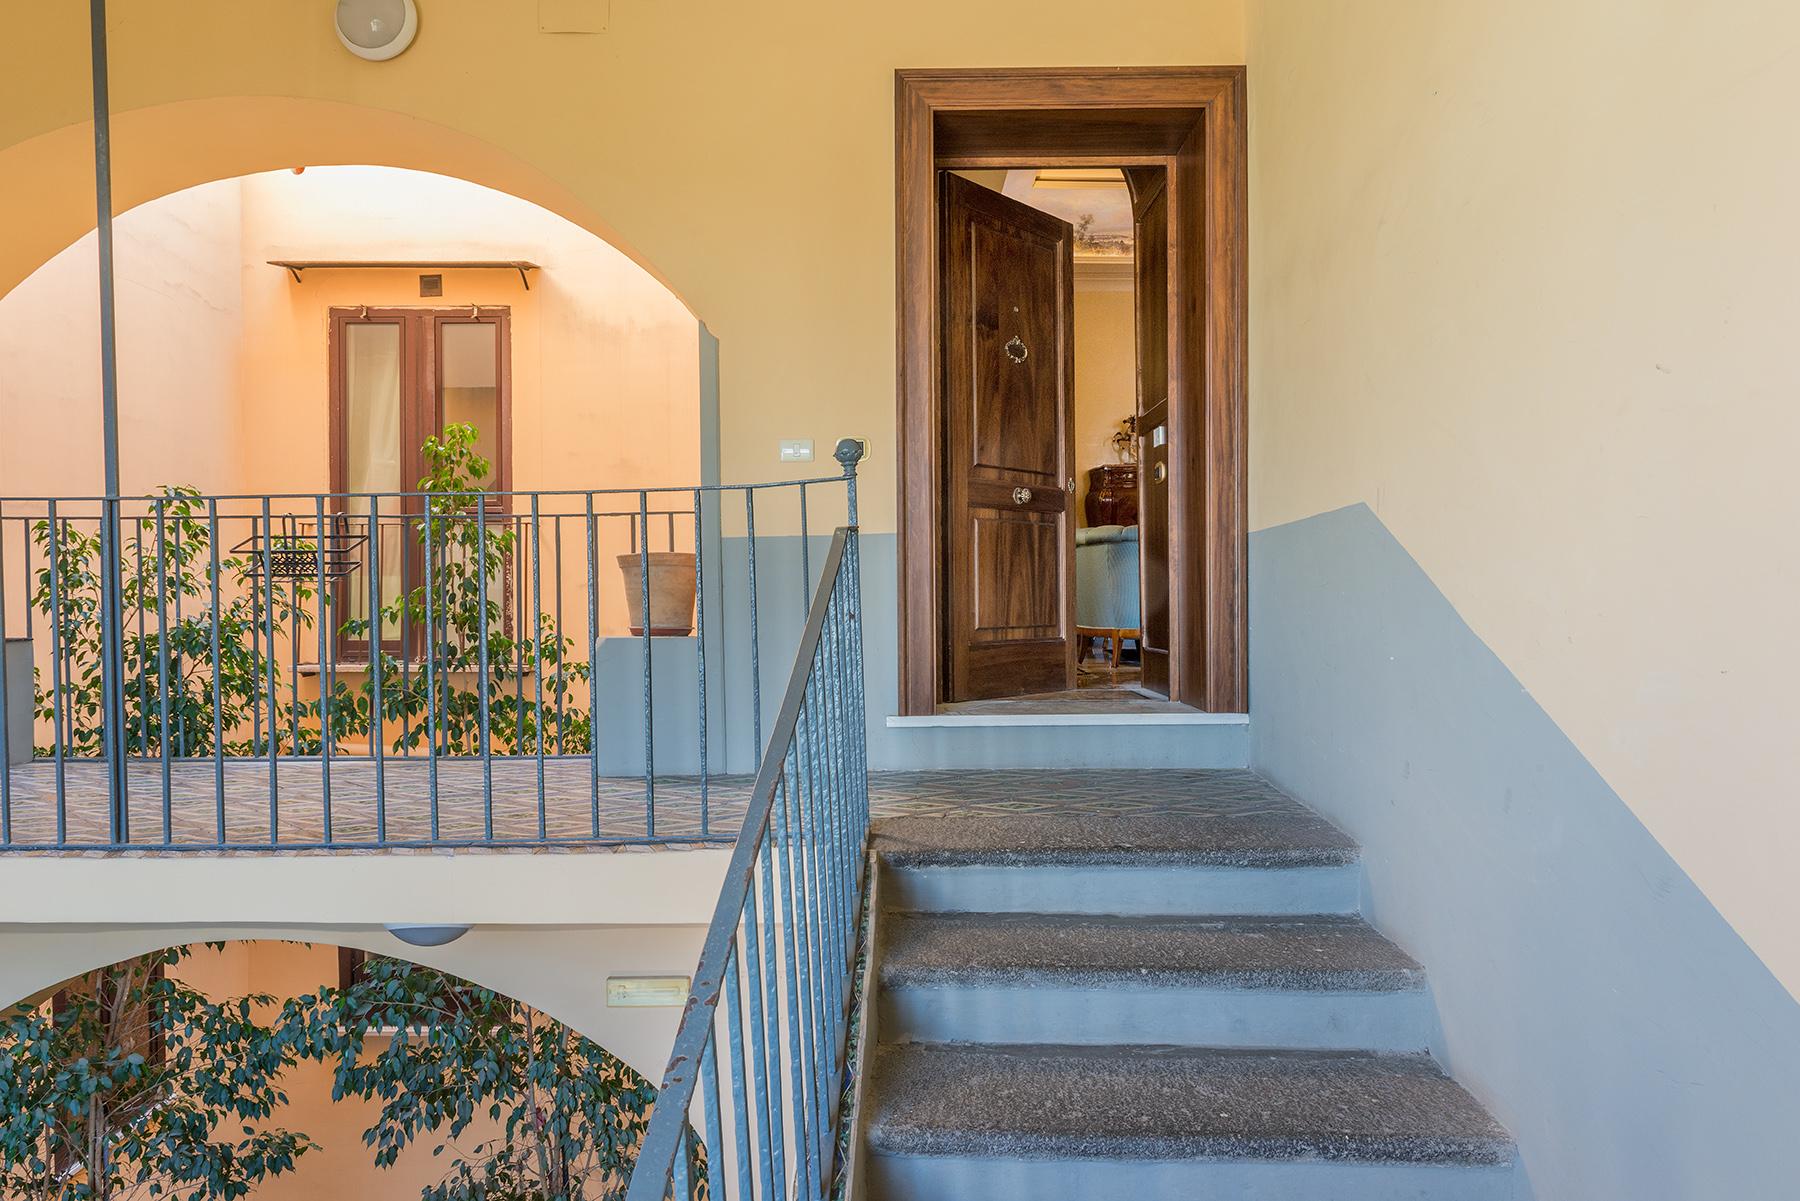                                                     Spectacular apartment in the center of Sorrento, Amalfi Coast                                                     - 20